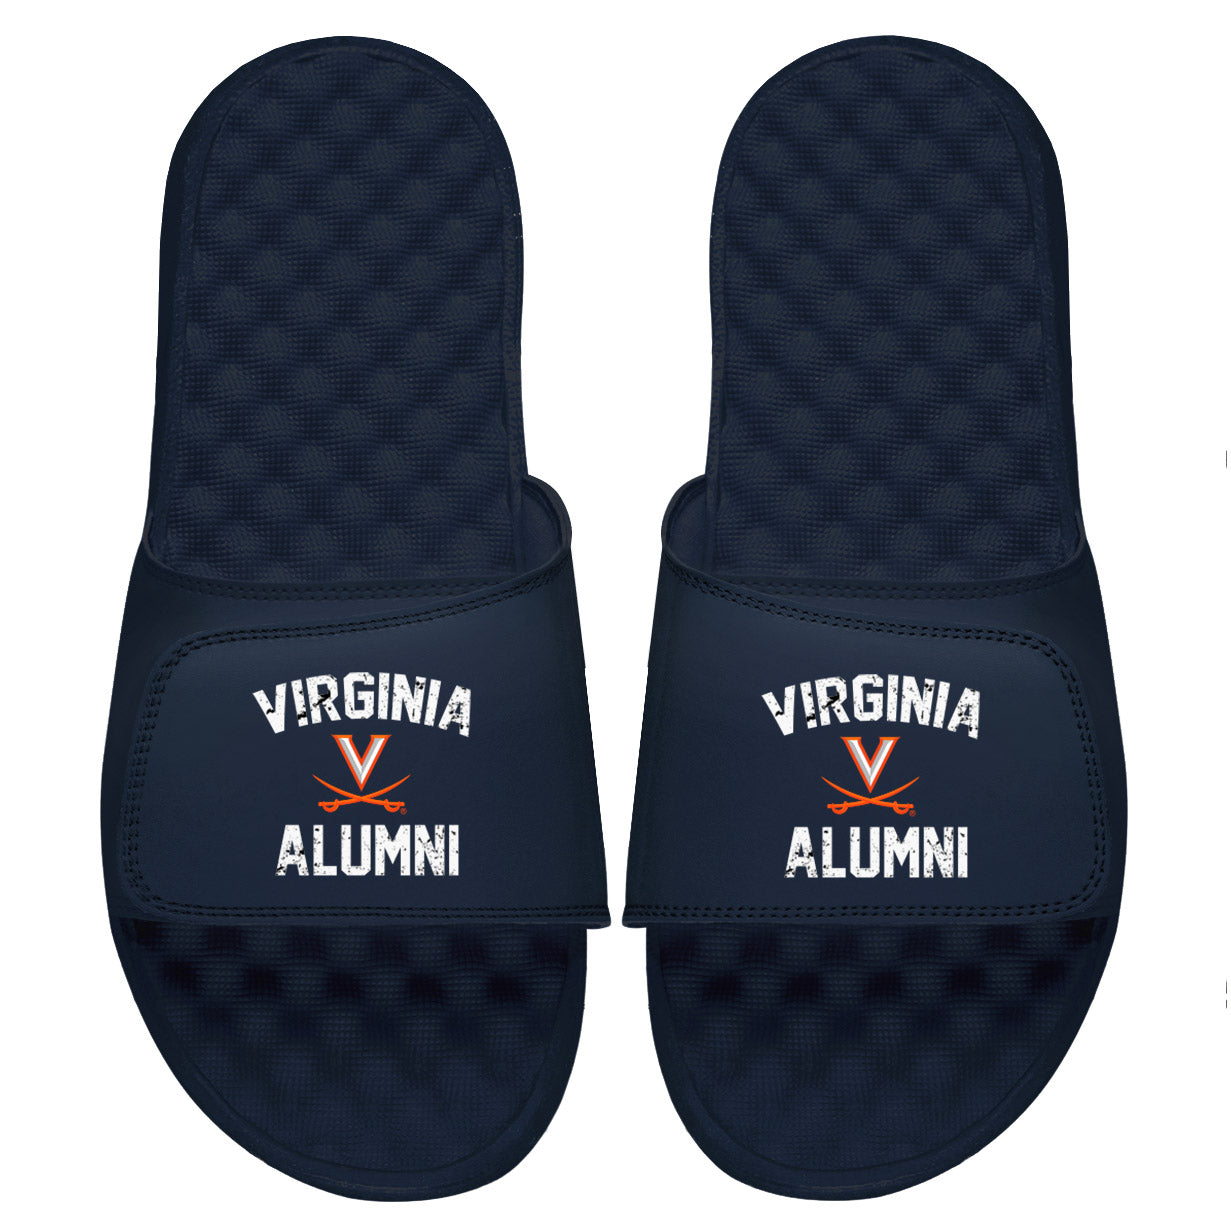 Virginia Alumni Slides